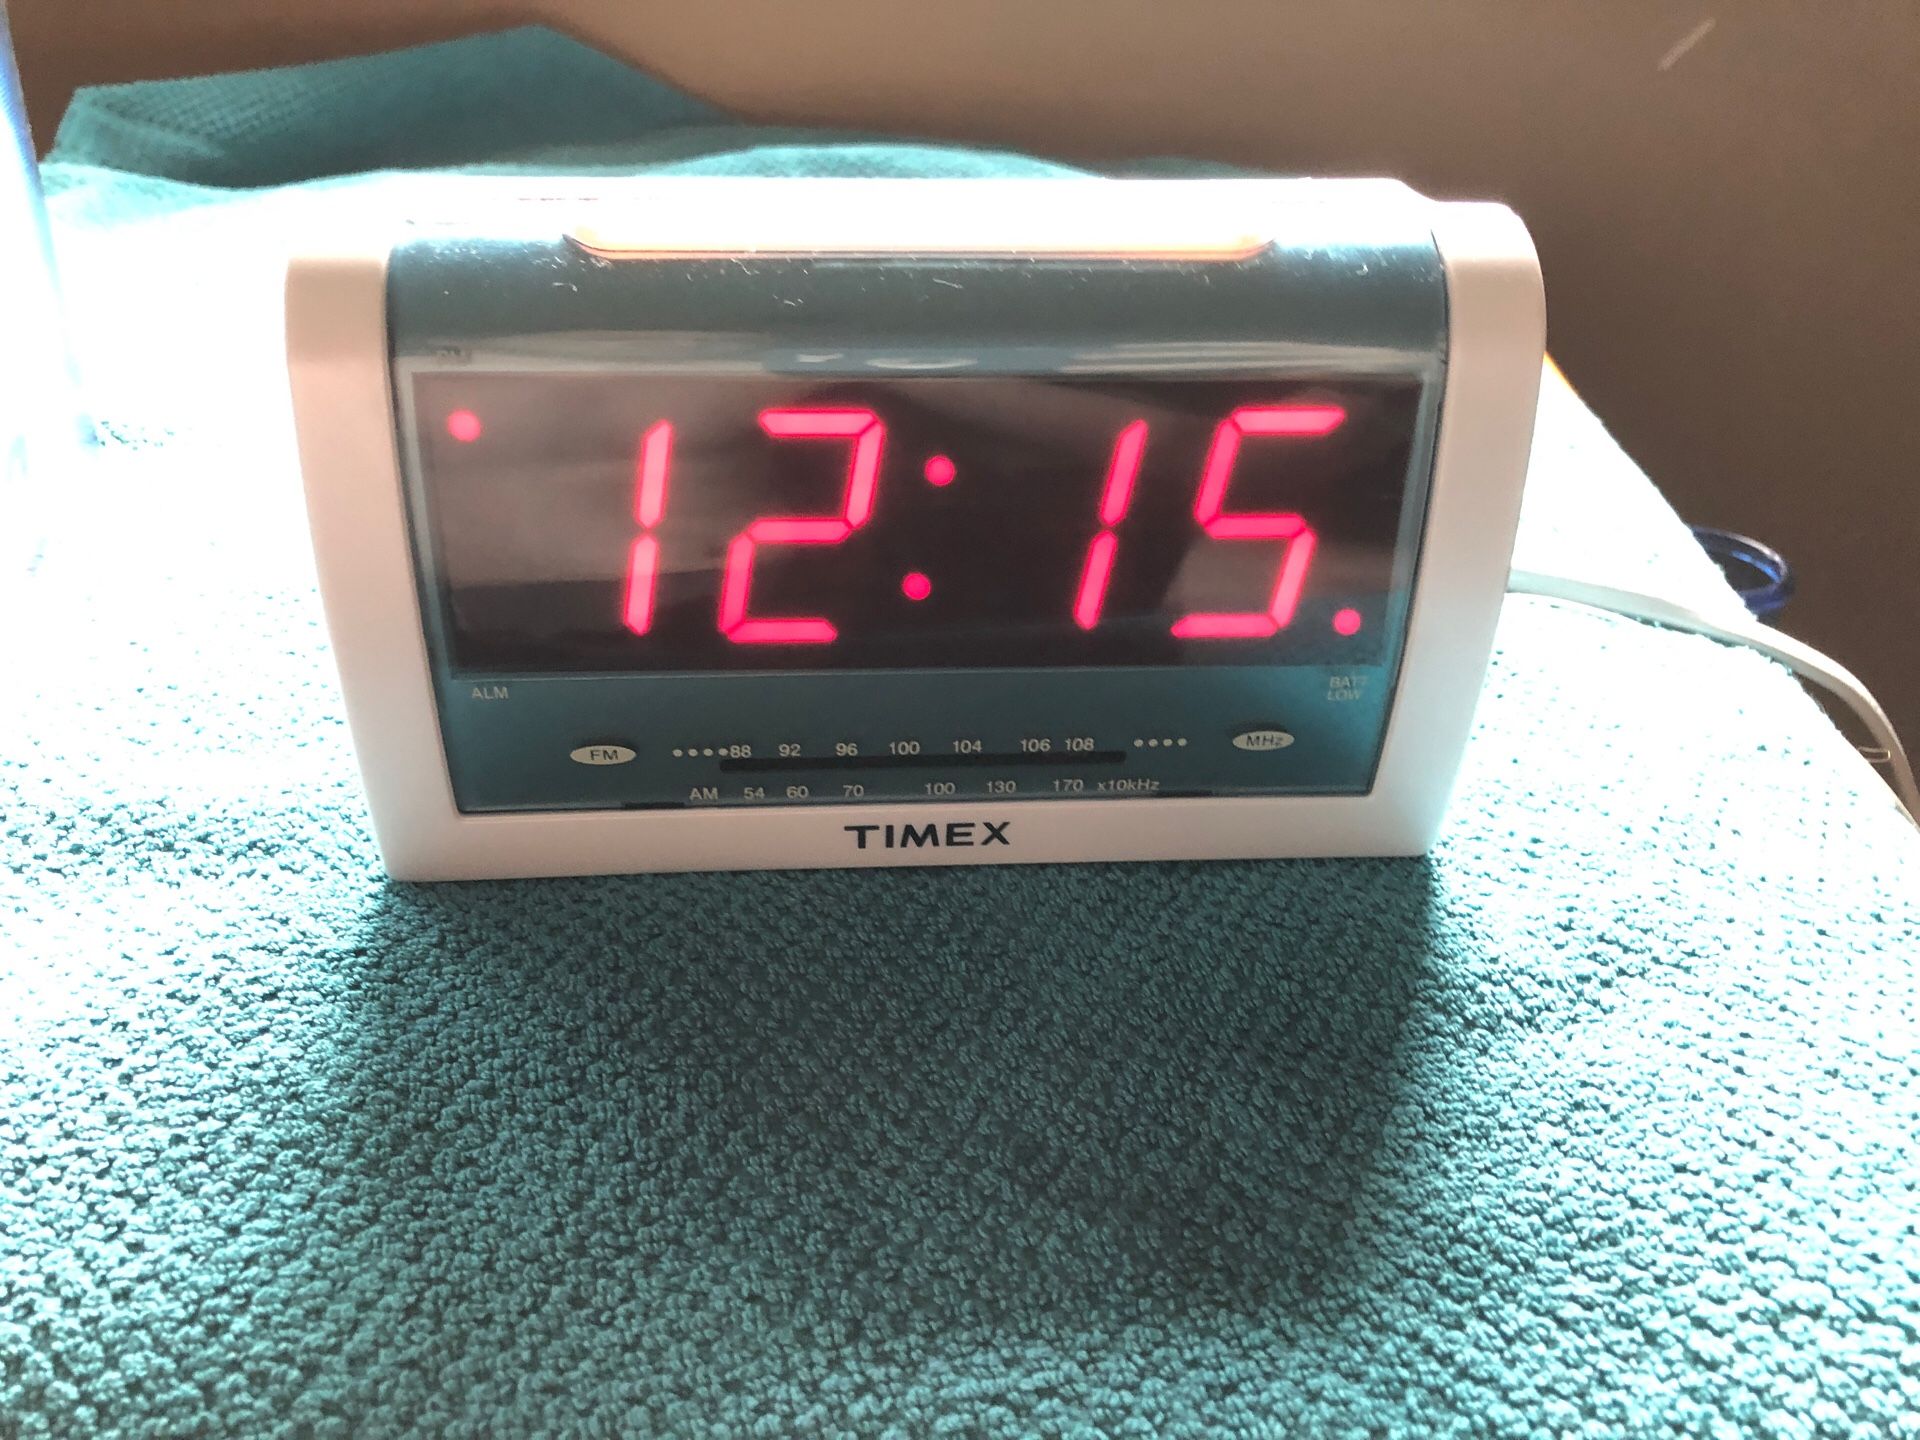 Timex alarm clock